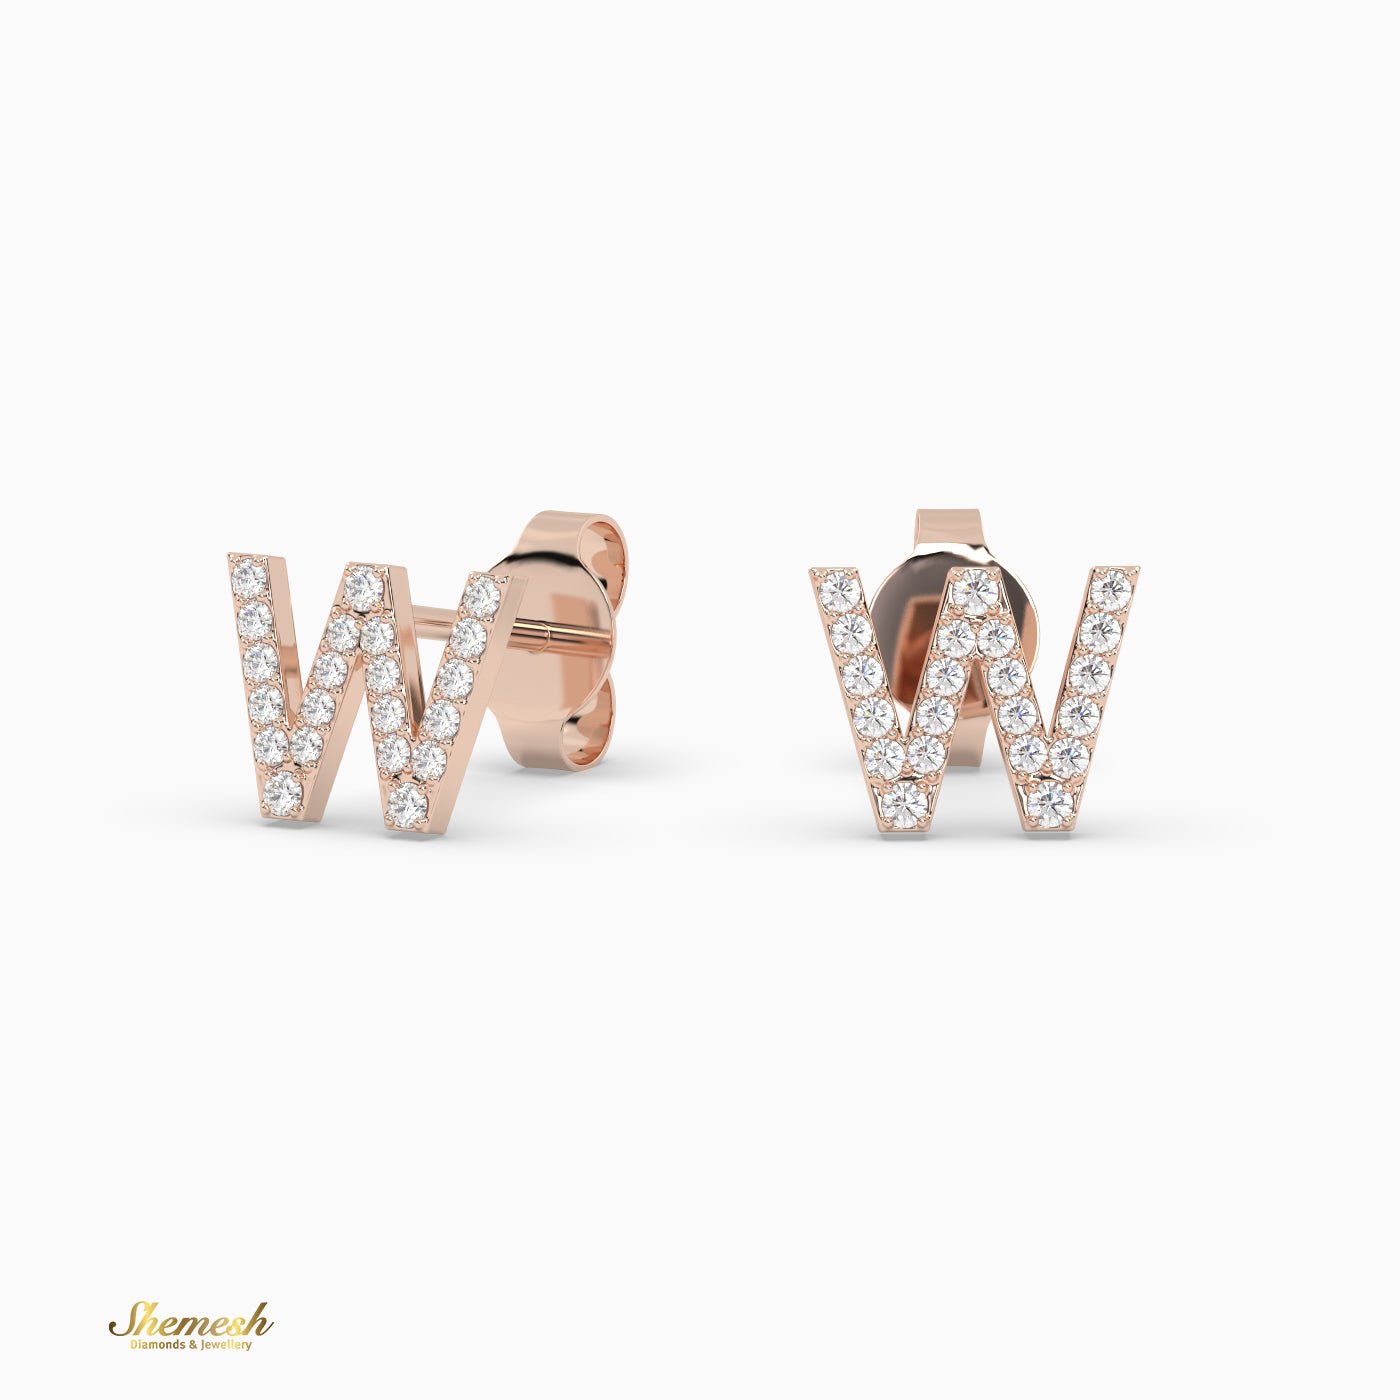 18K Gold "W" Initial Stud Earrings - shemesh_diamonds